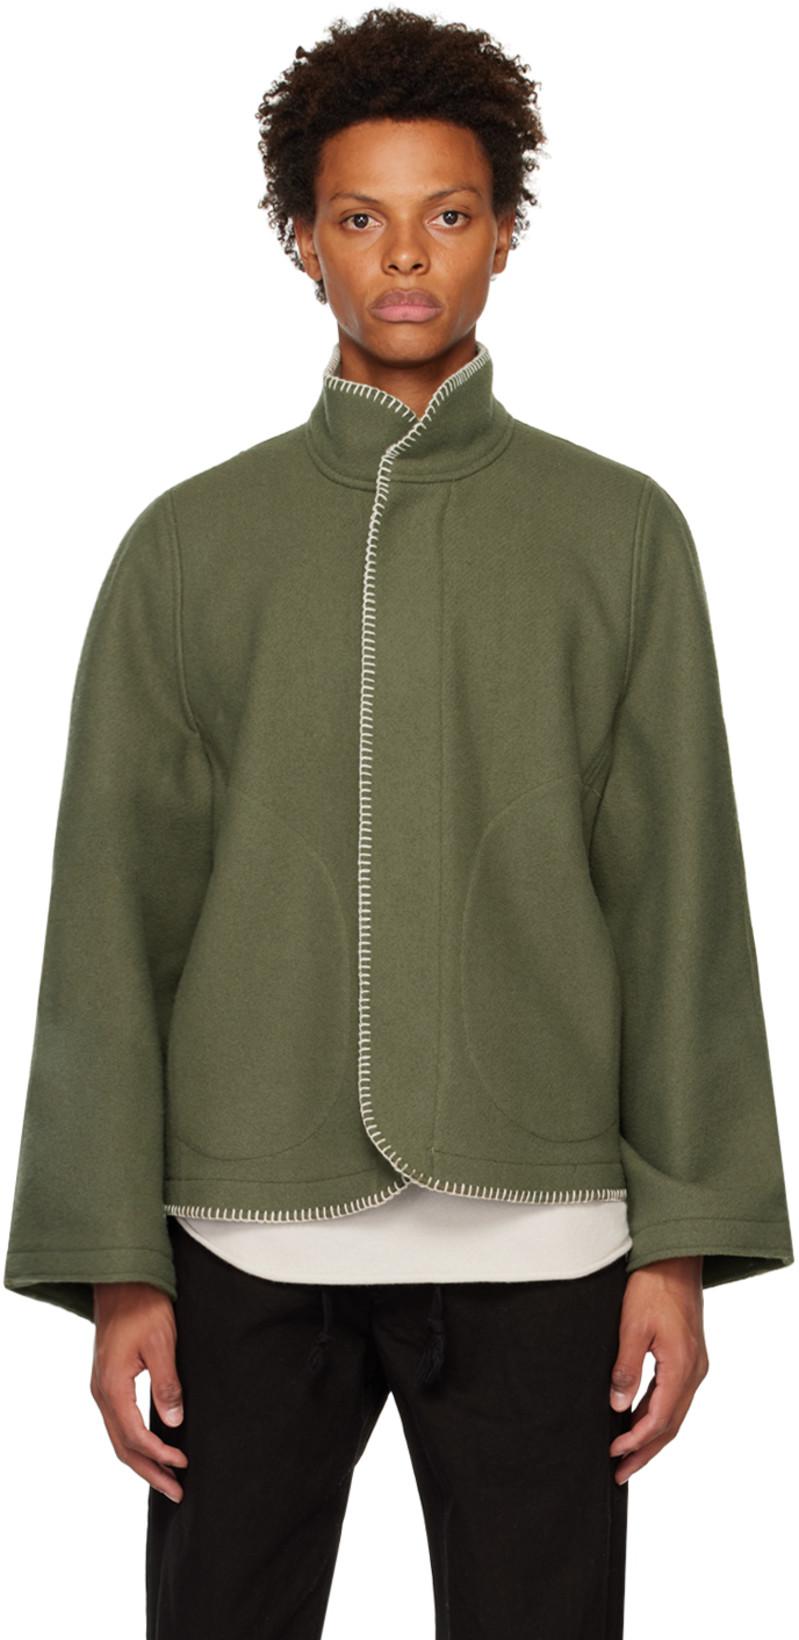 Green Blanket Jacket by 3MAN | jellibeans